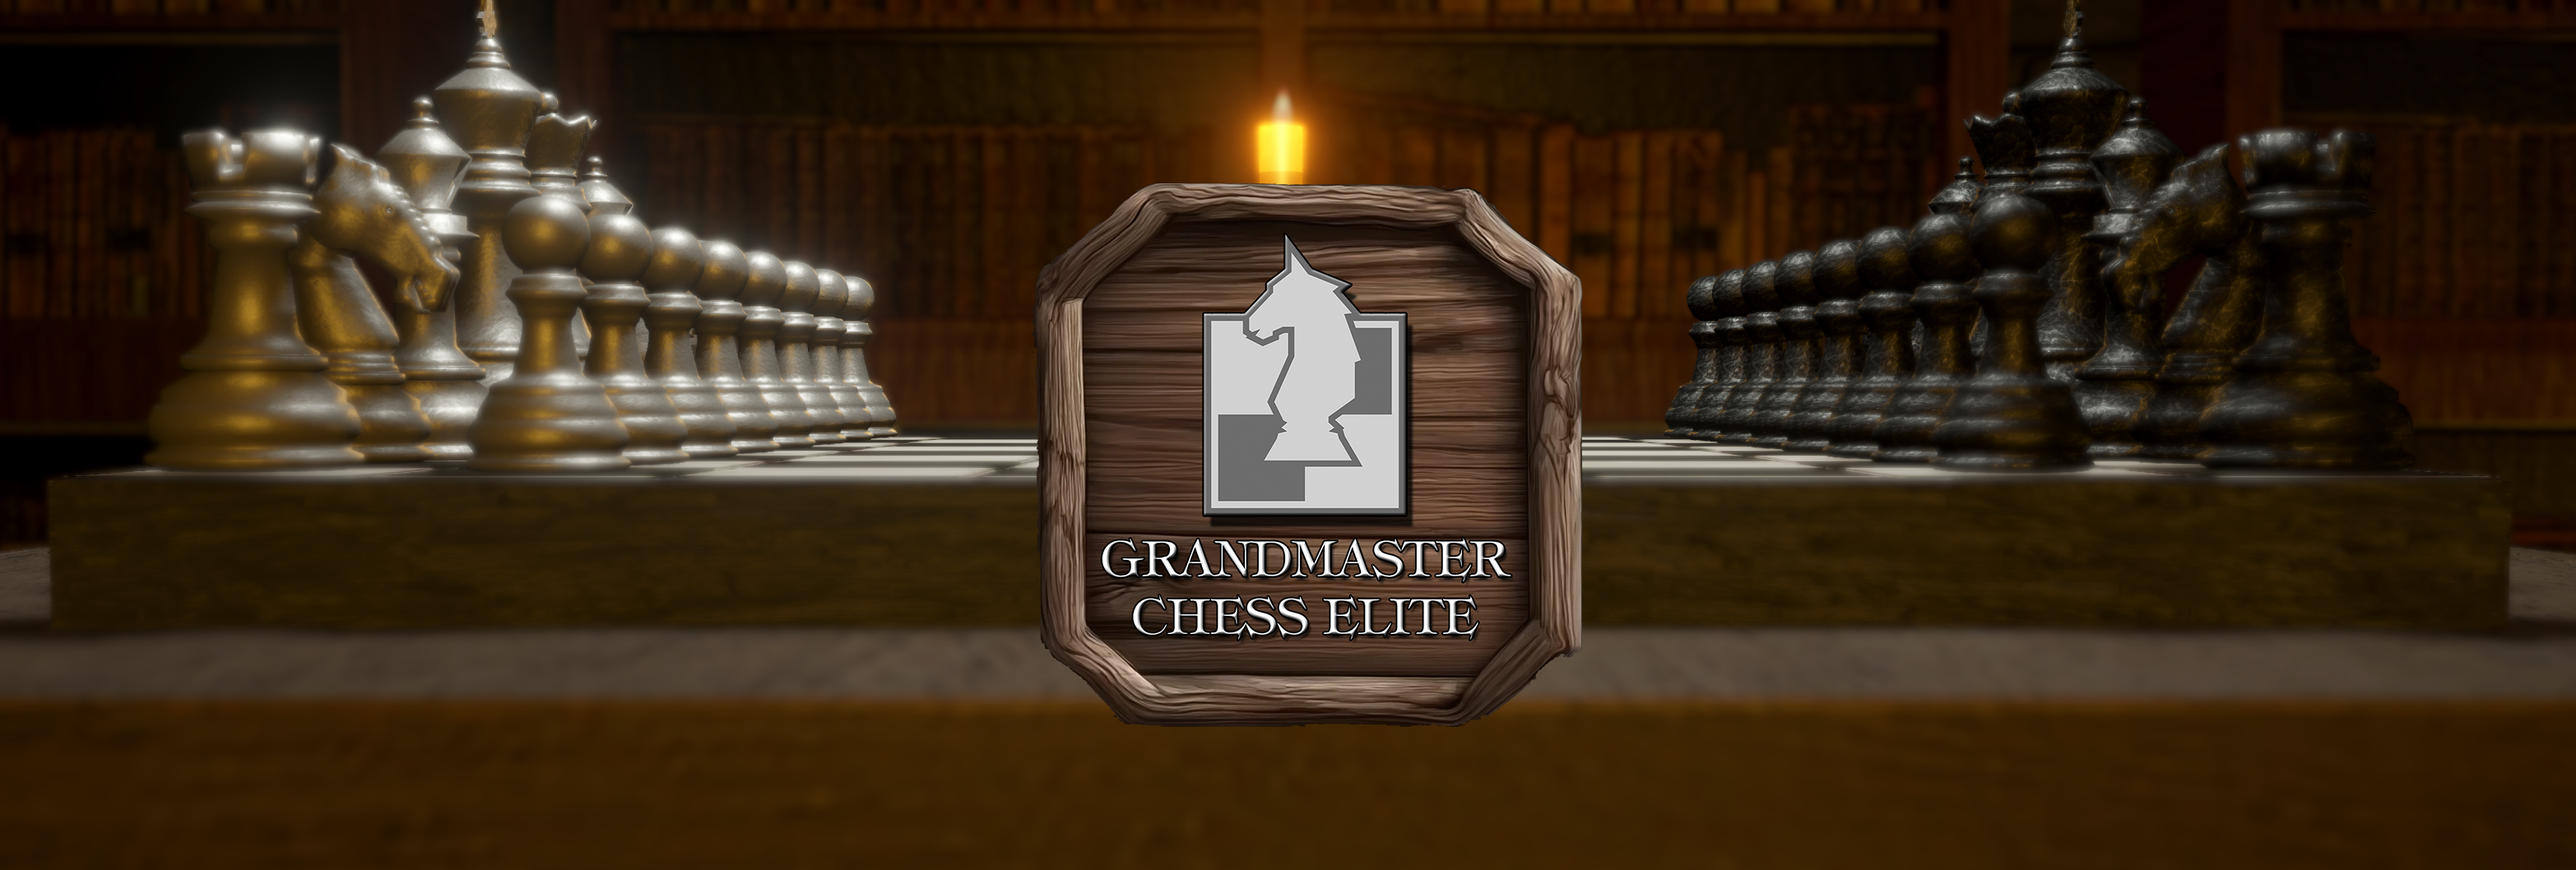 Grandmaster Chess Elite